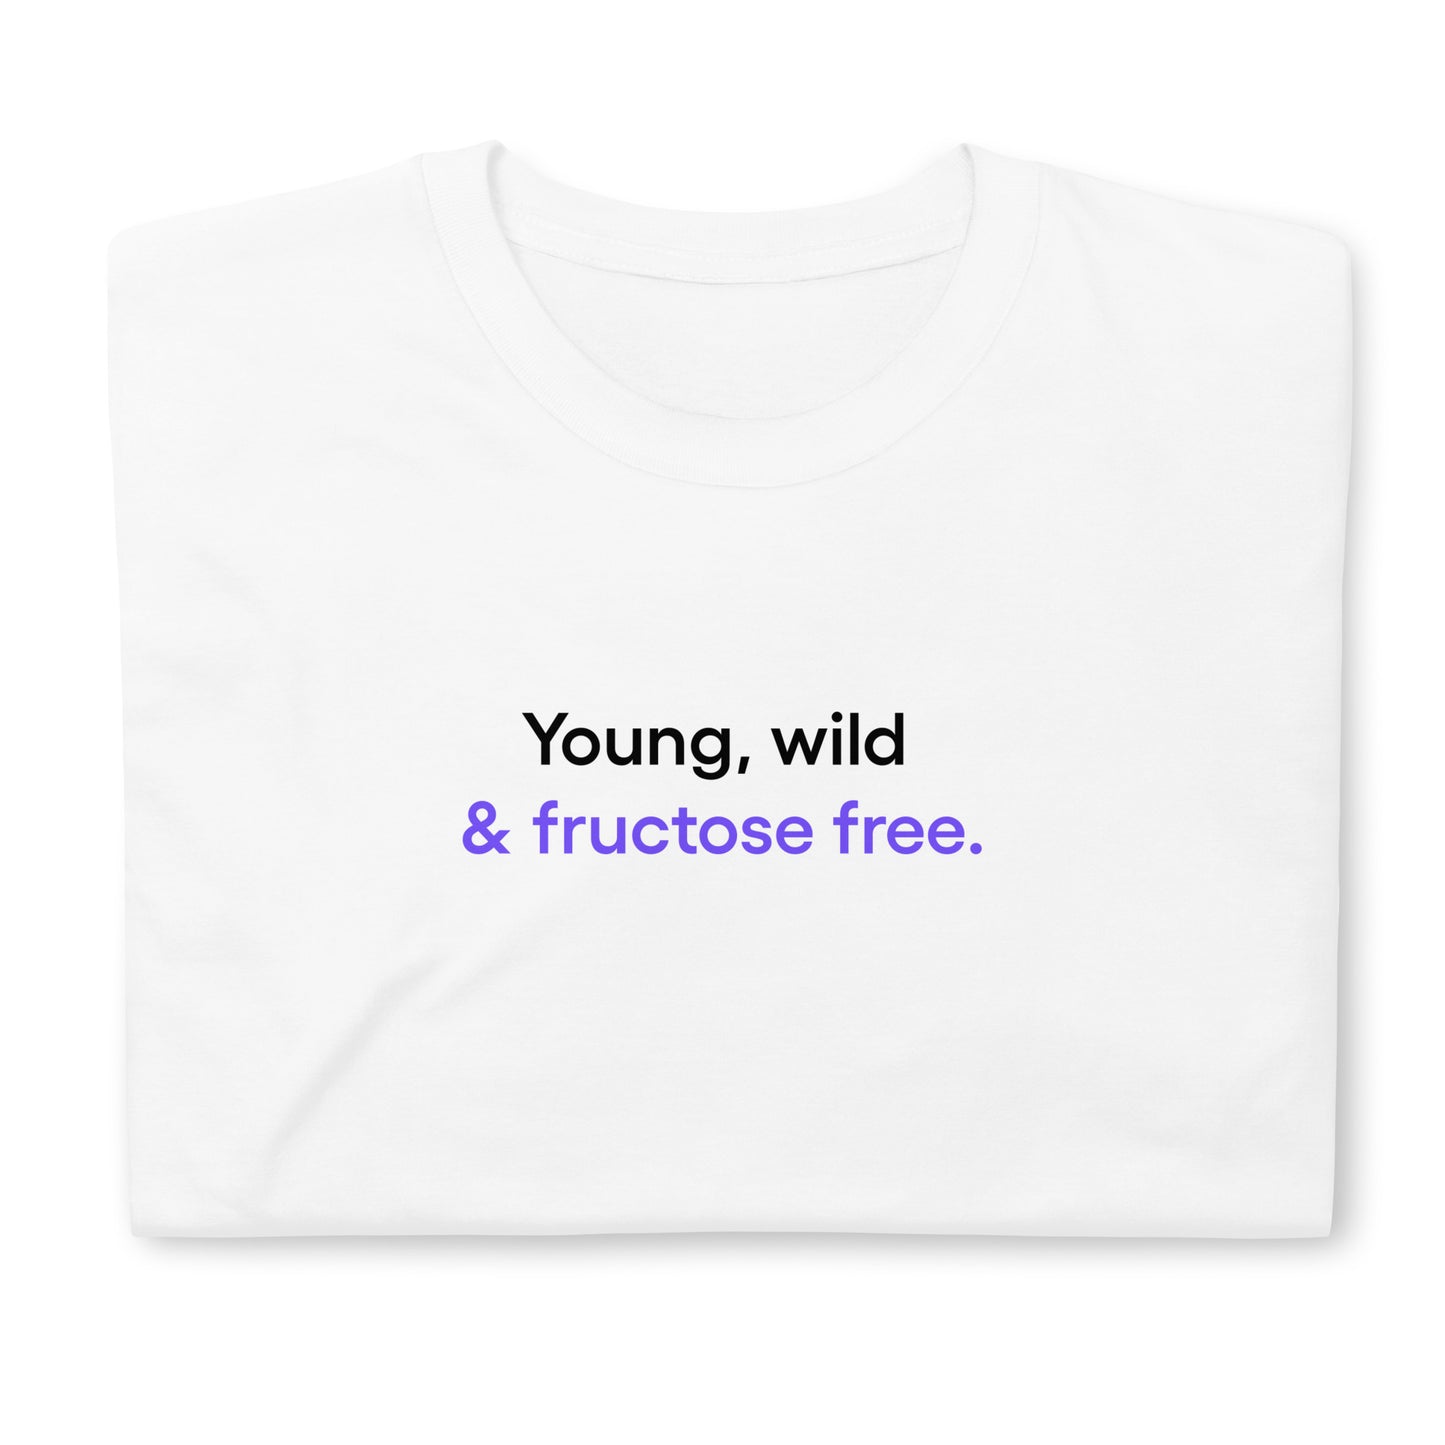 Young, wild & fructose free | Short-Sleeve Unisex T-Shirt